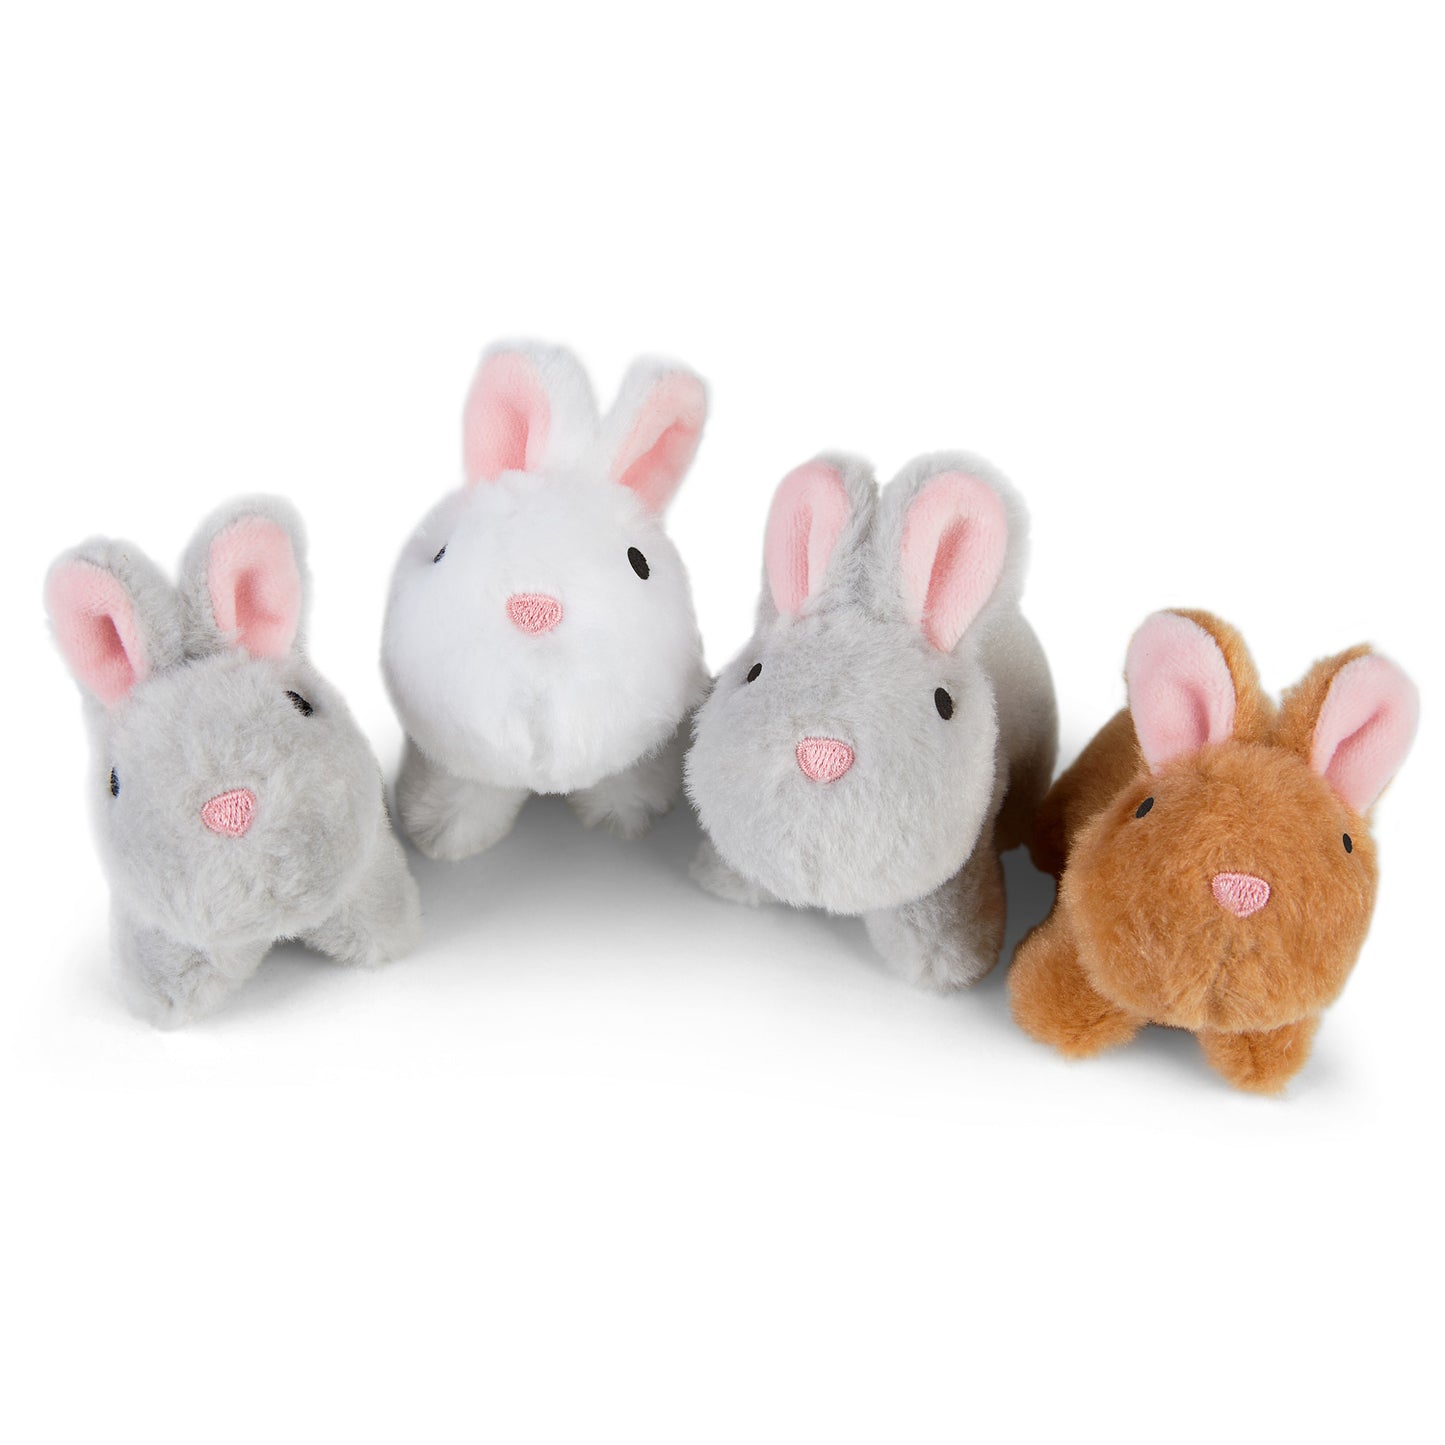 Mamanimals Cuddly Toy Baby Rabbits, 4 pieces